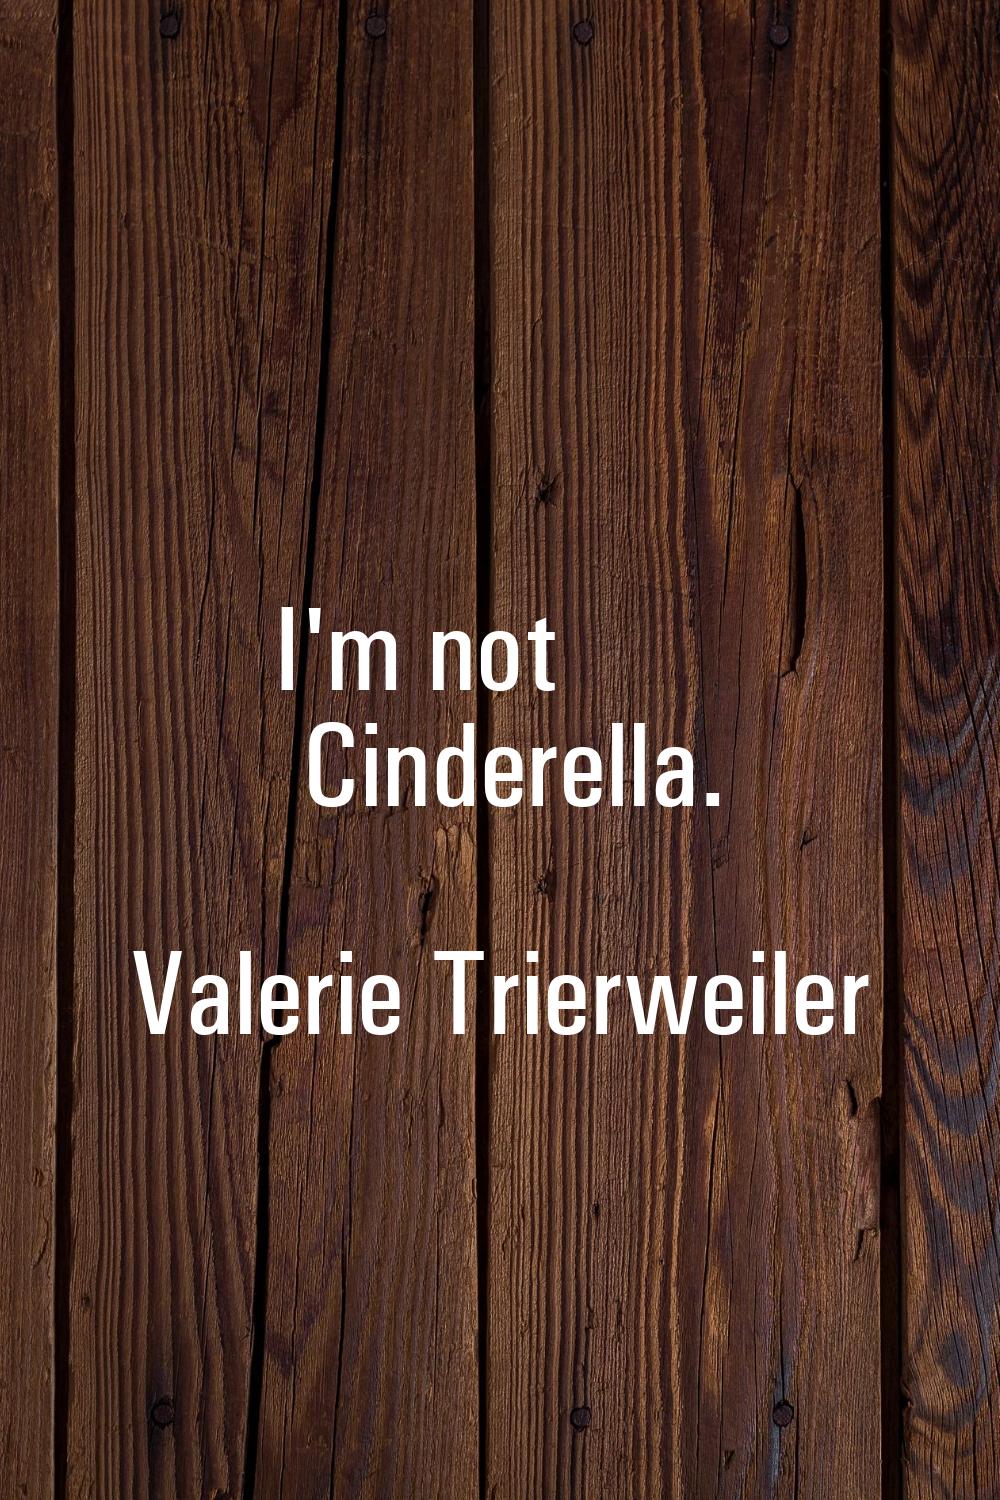 I'm not Cinderella.